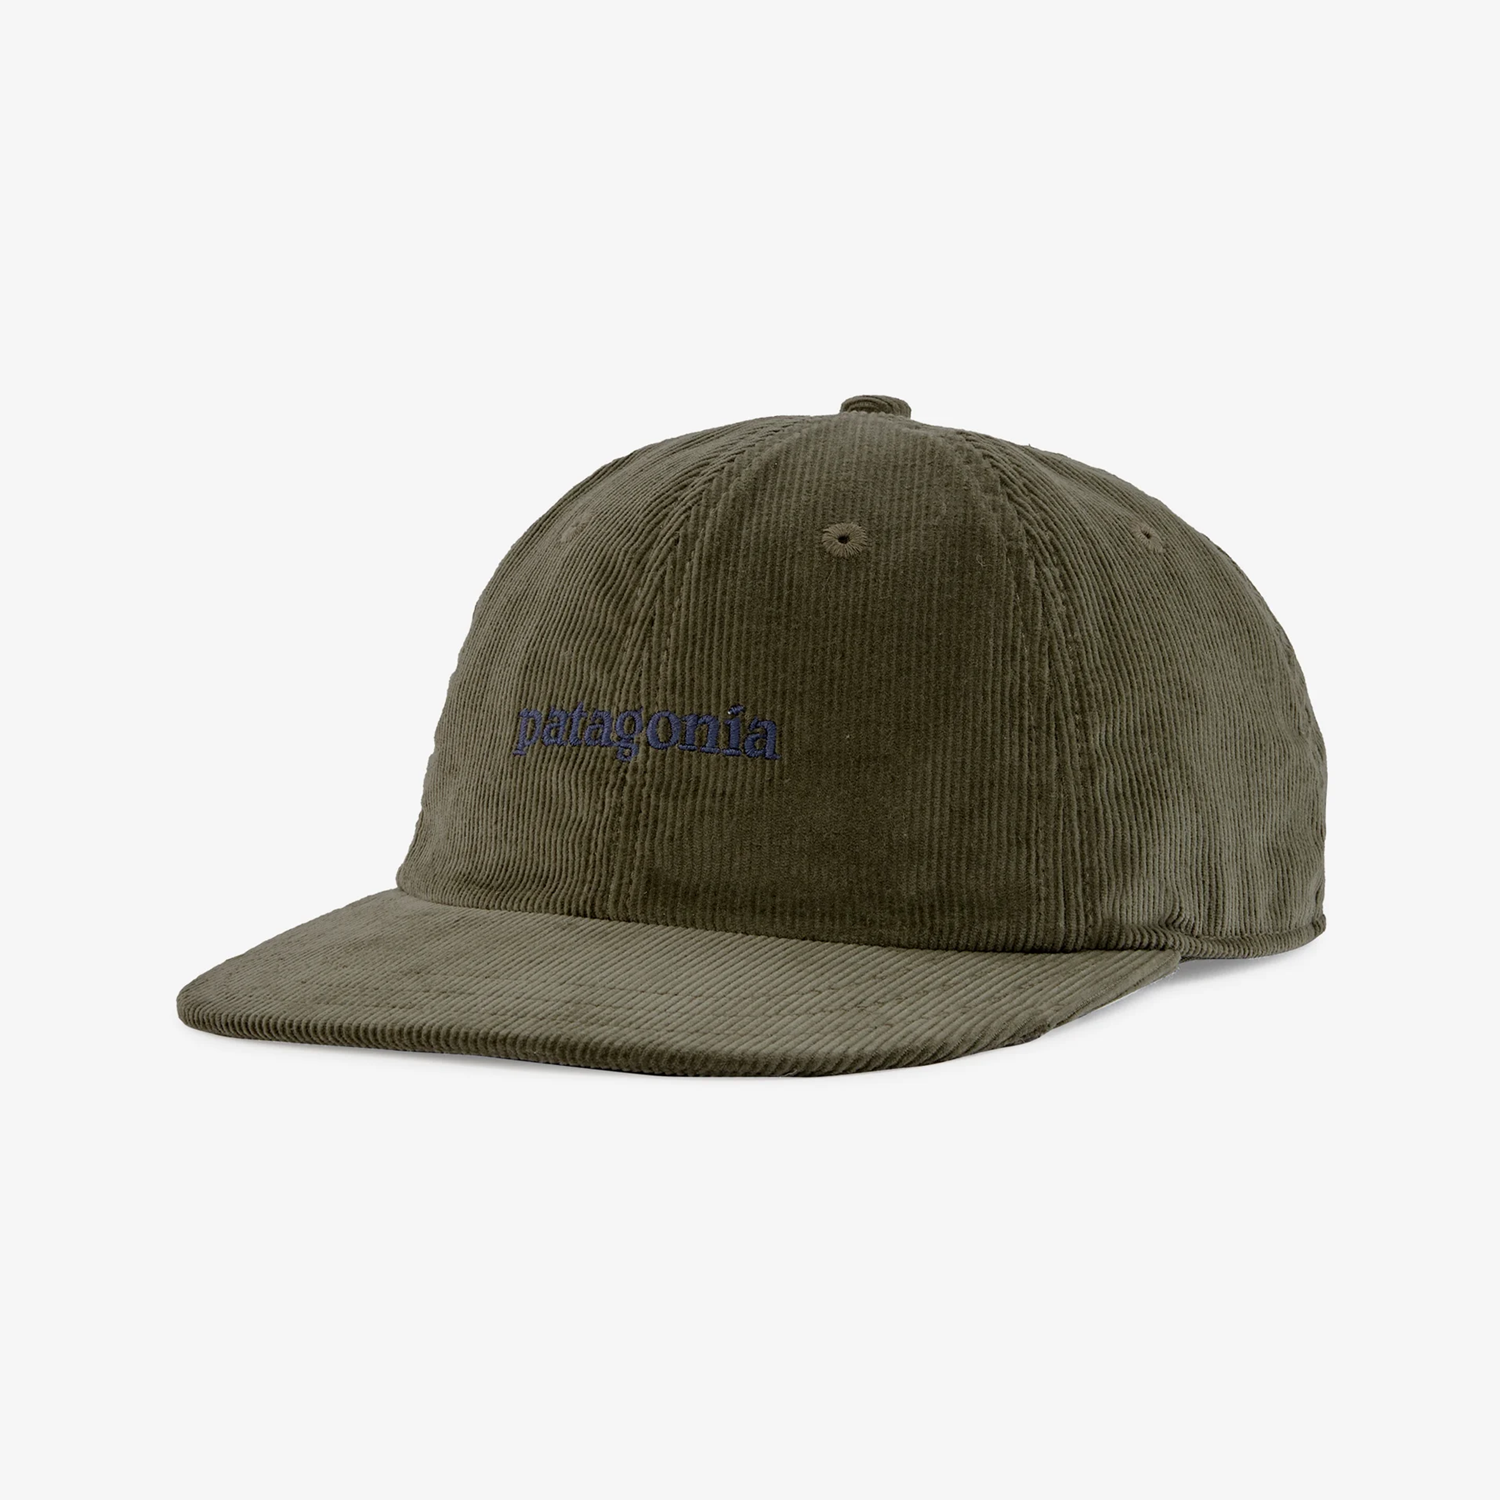 PATAGONIA CORDUROY CAP